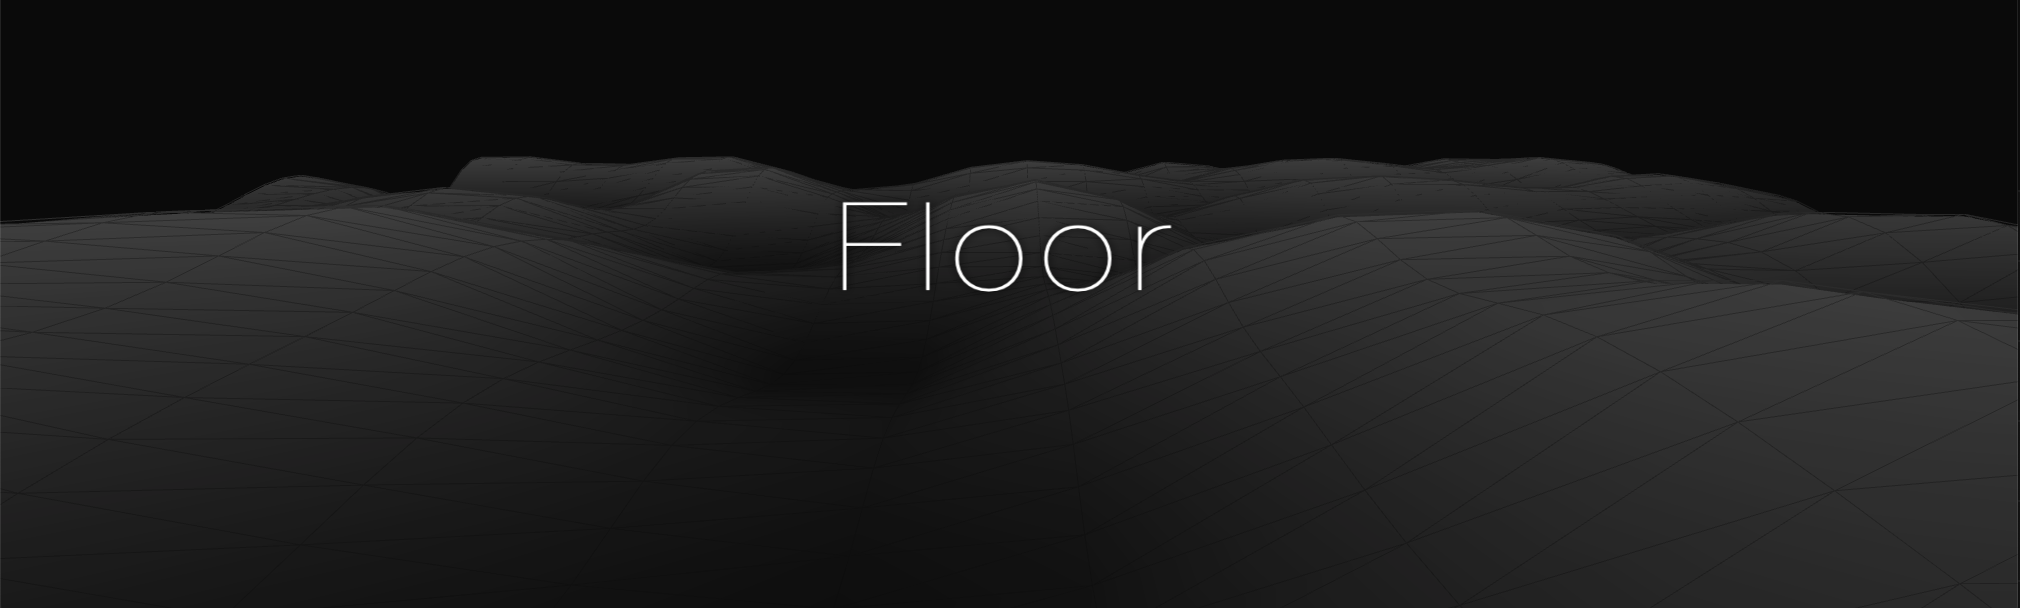 Moving floor